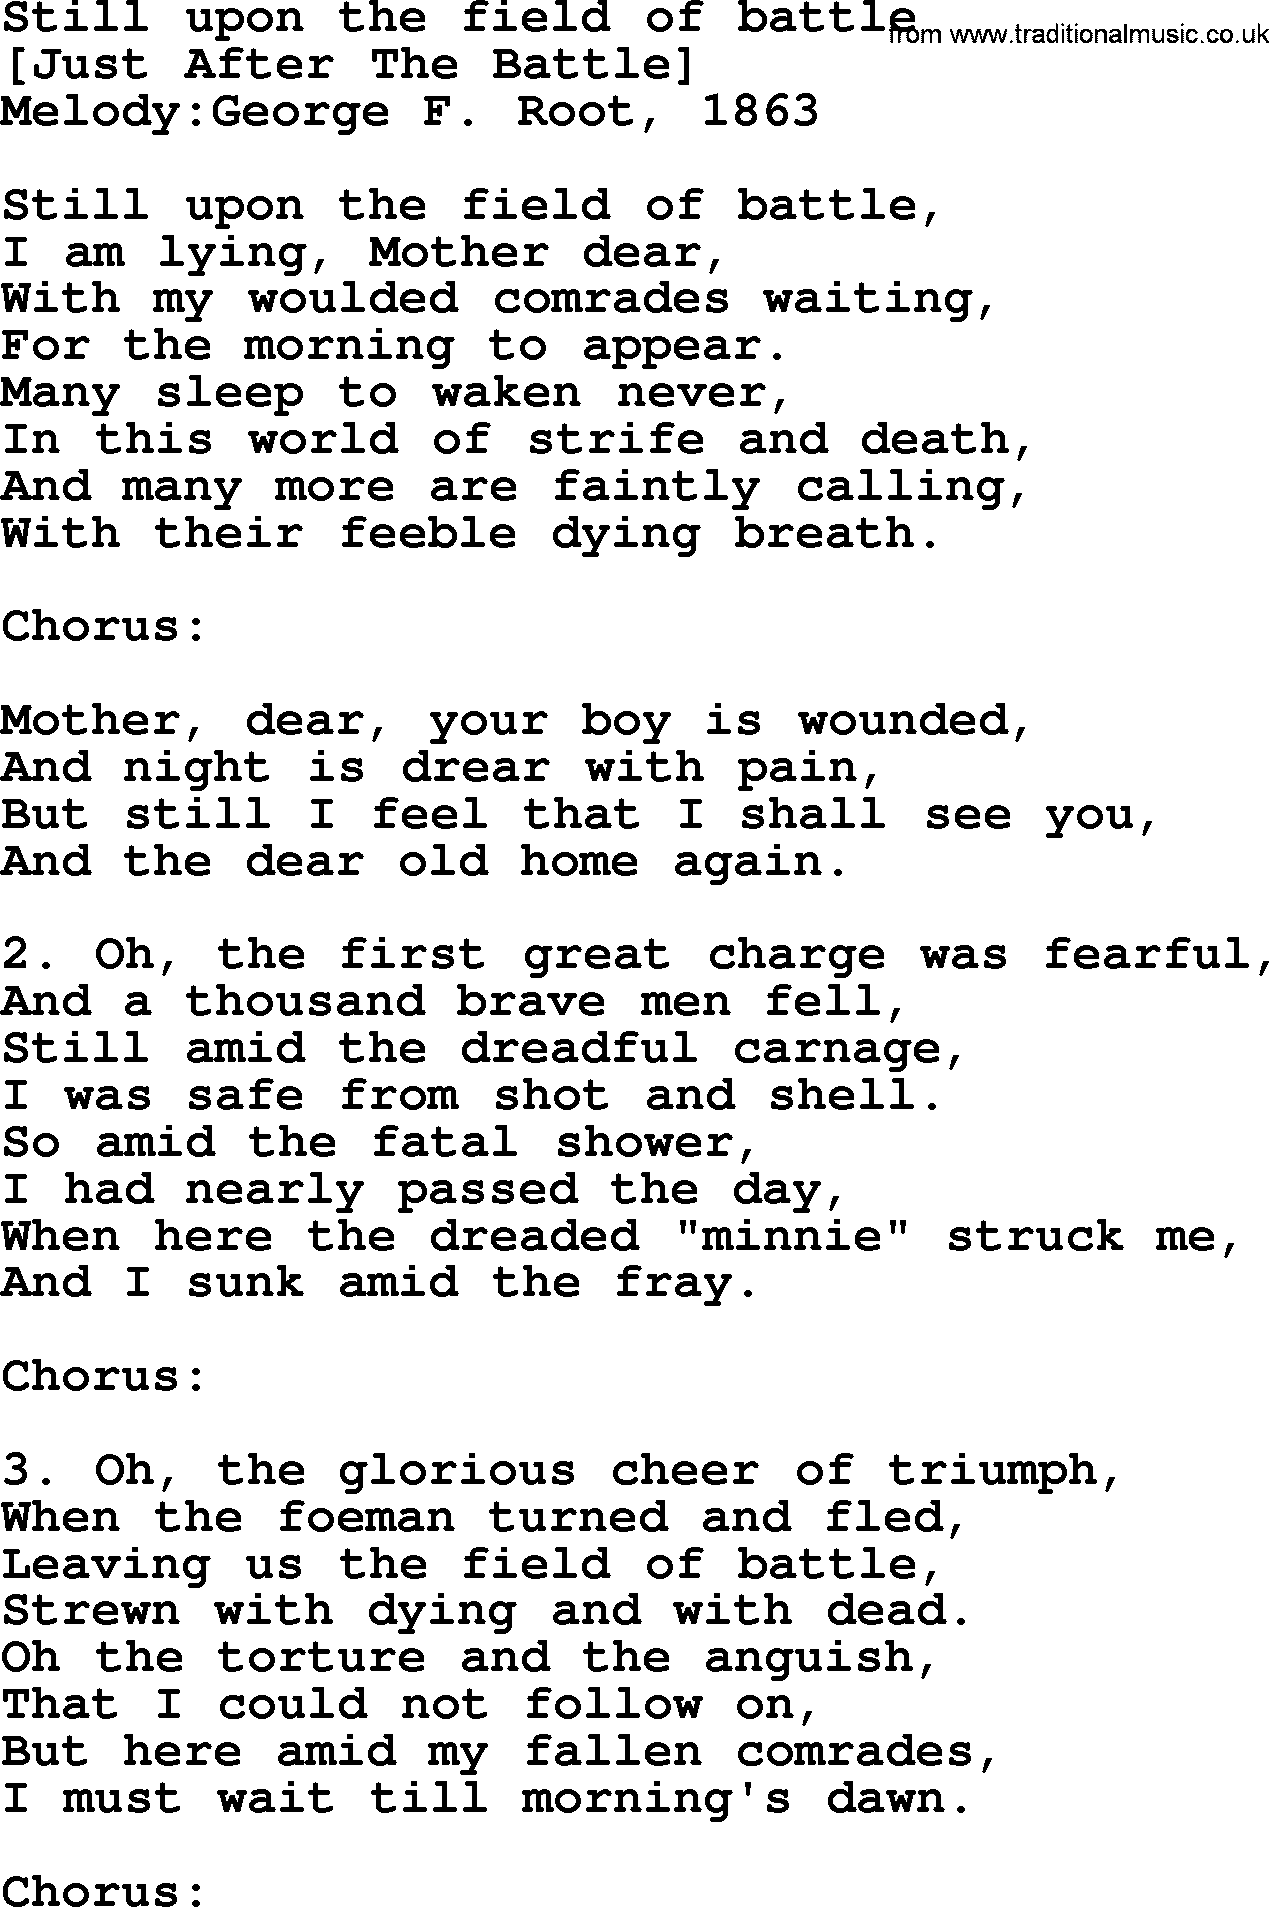 Old American Song: Still Upon The Field Of Battle, lyrics